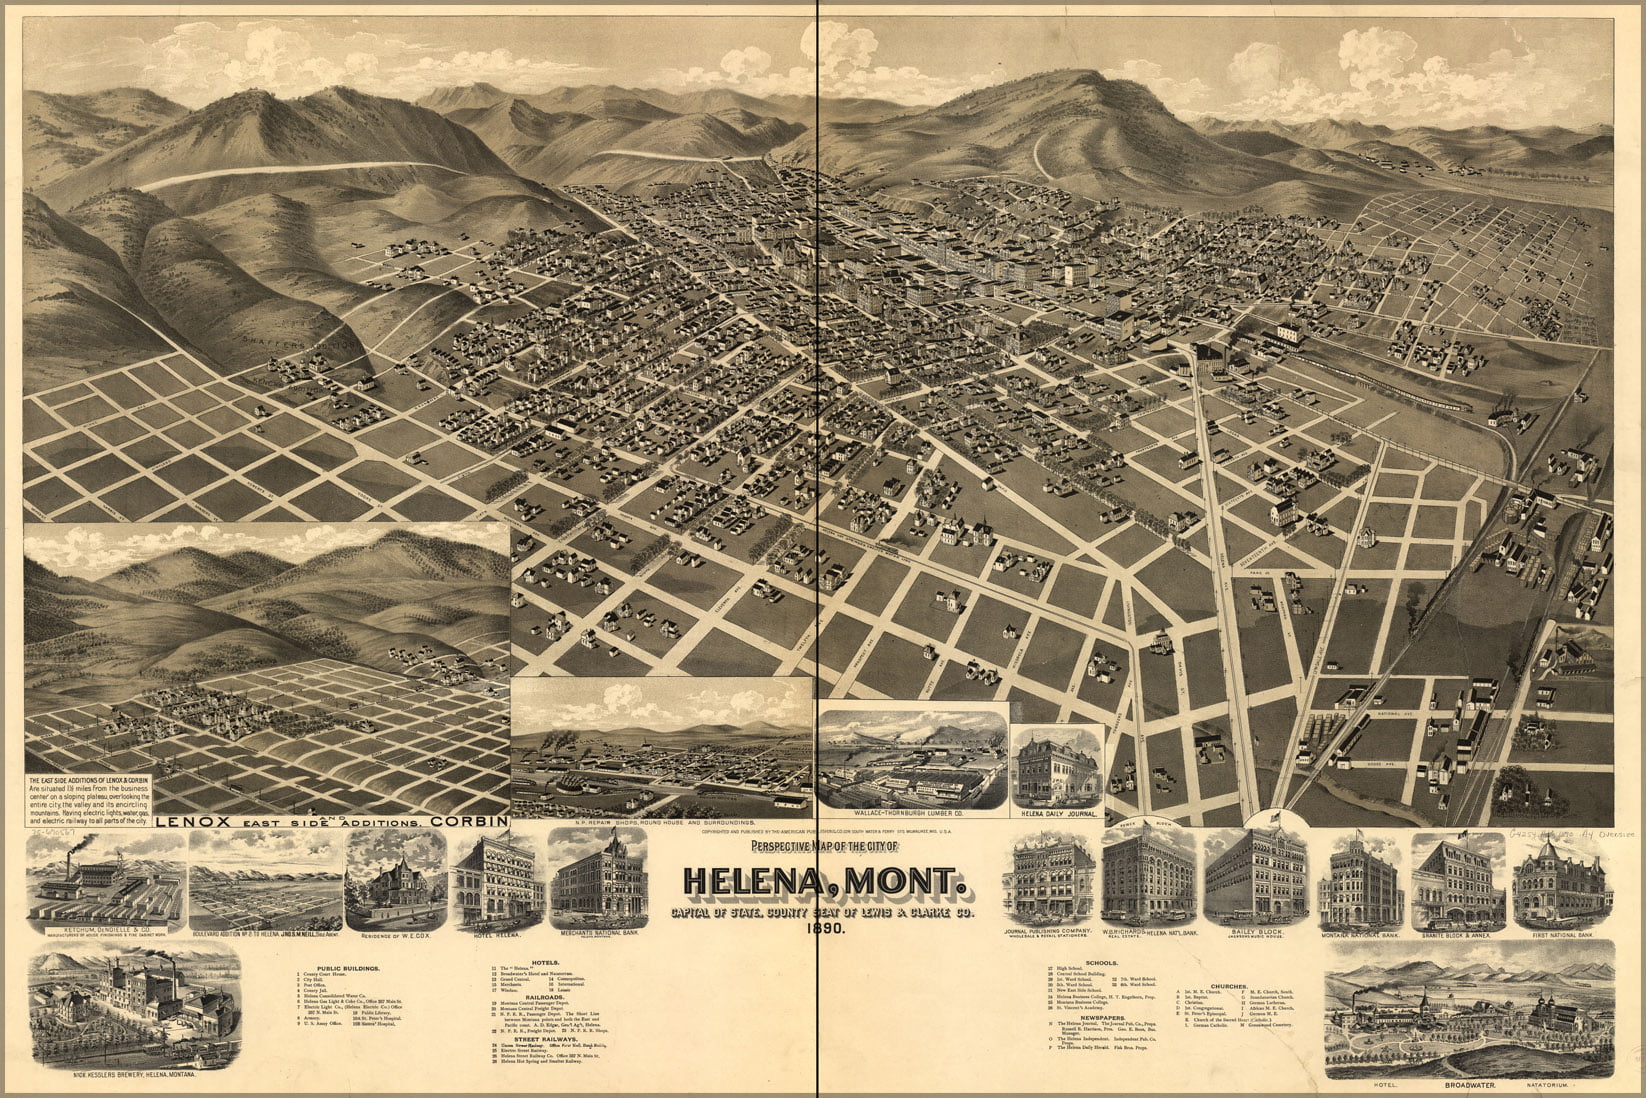 24"x36" Gallery Poster, birdseye view map of helena montana 1890